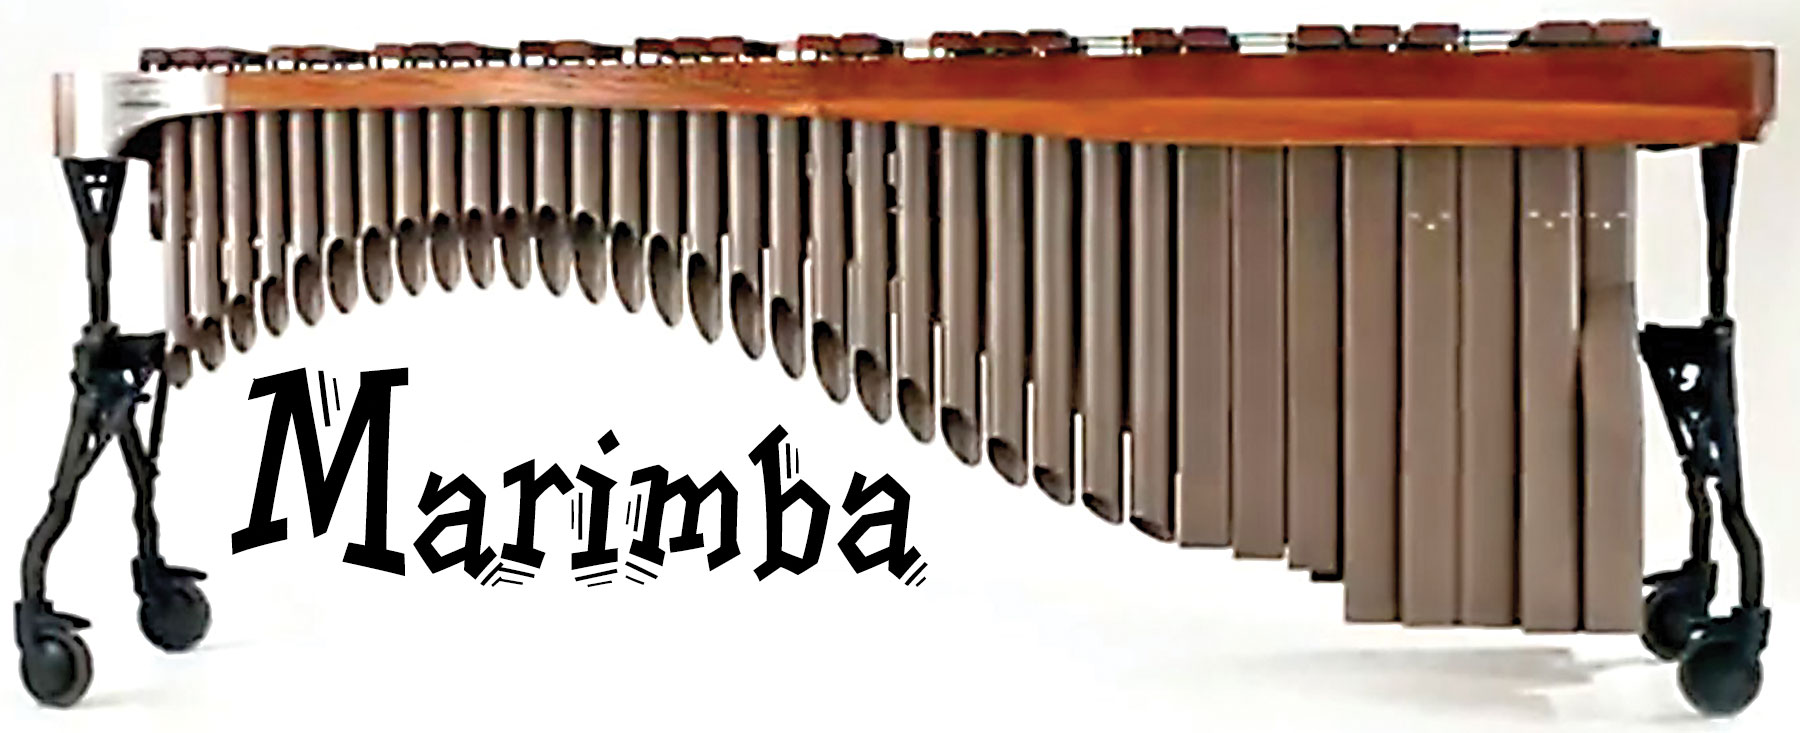 Marimba header